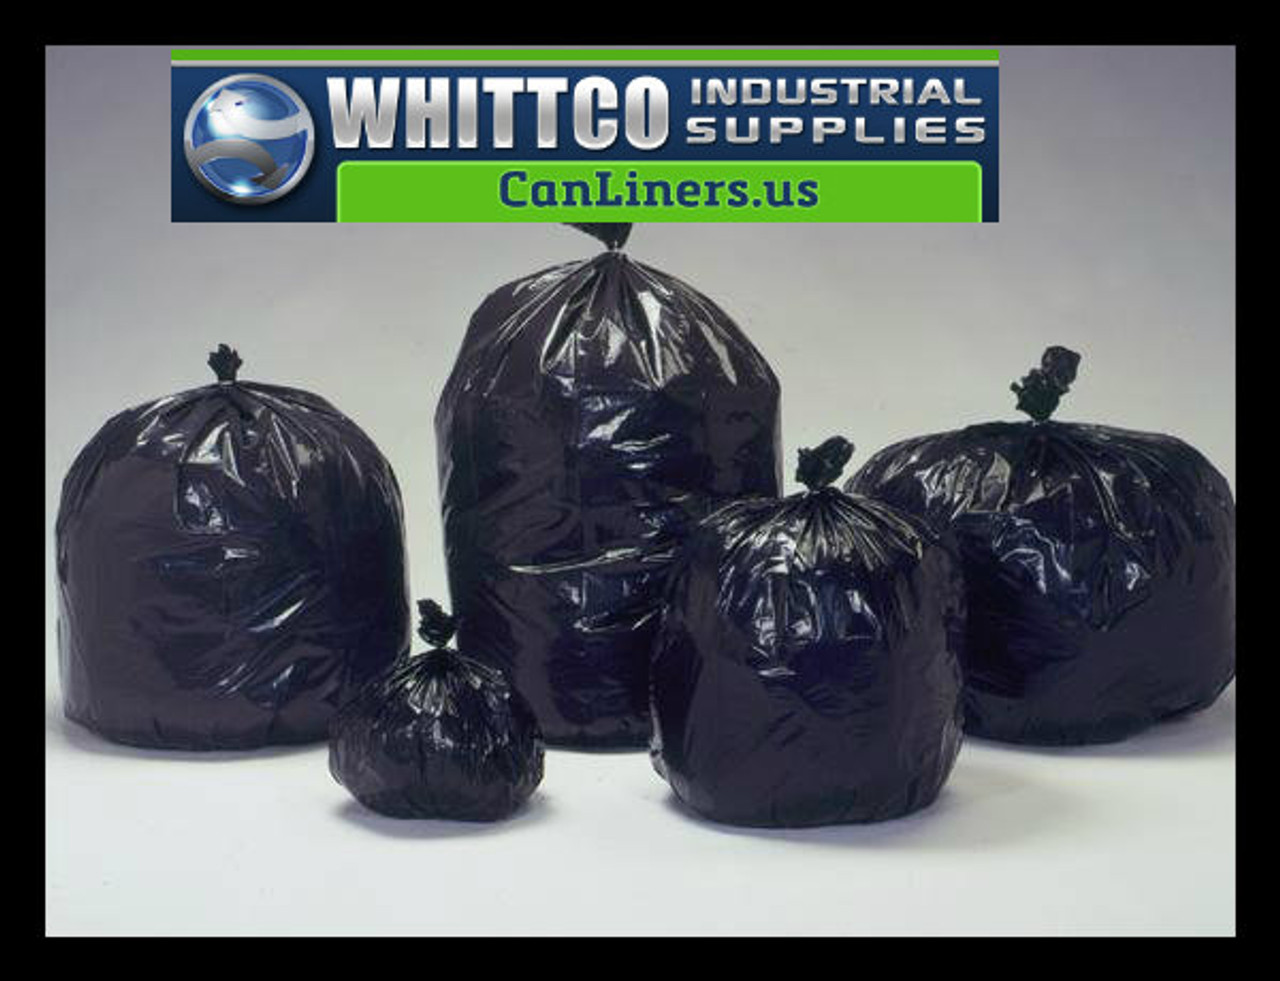 Coastwide Professional 20-30 Gallon Industrial Trash Bag, 30 x 36, Low Density, 0.45 mil, Black, 250 | Quill